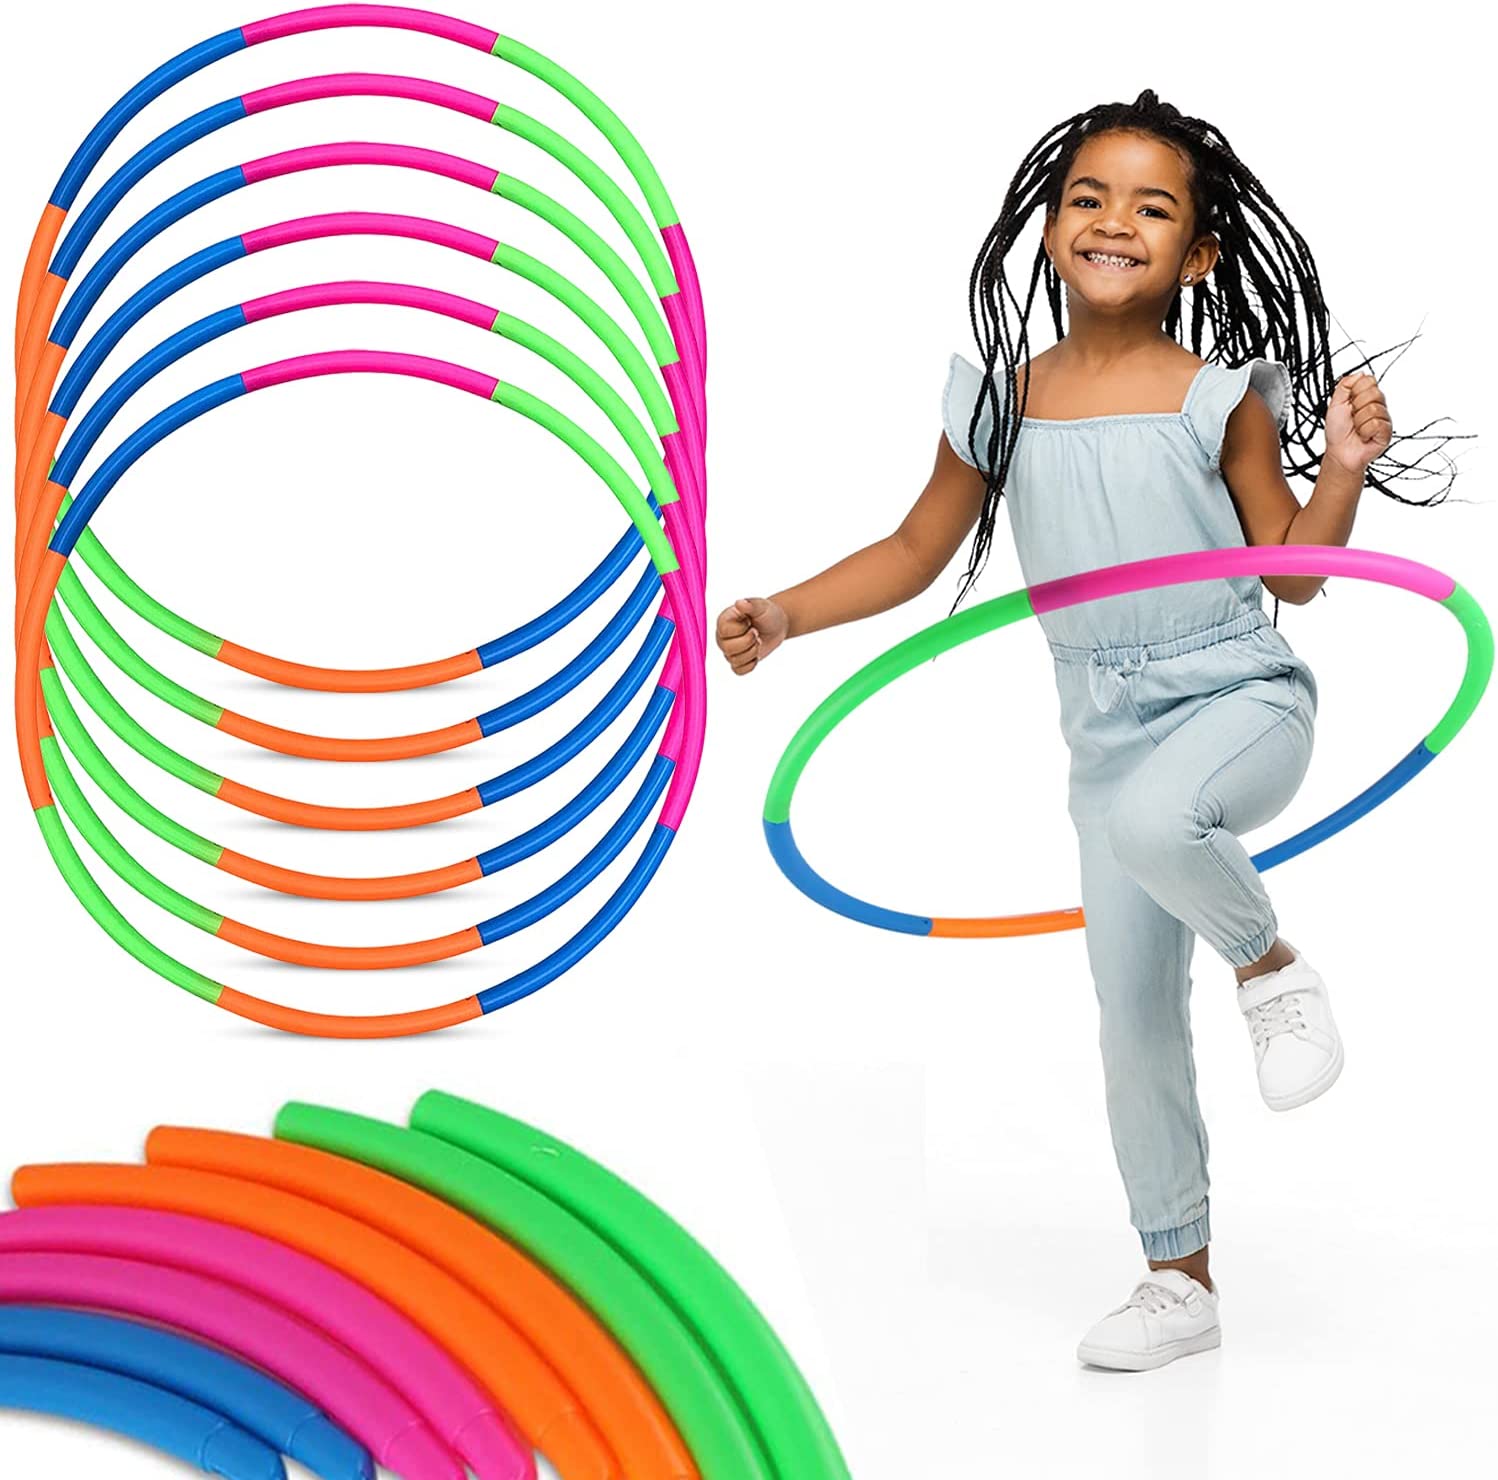 Little girl hula hooping with multi-colored hoop 